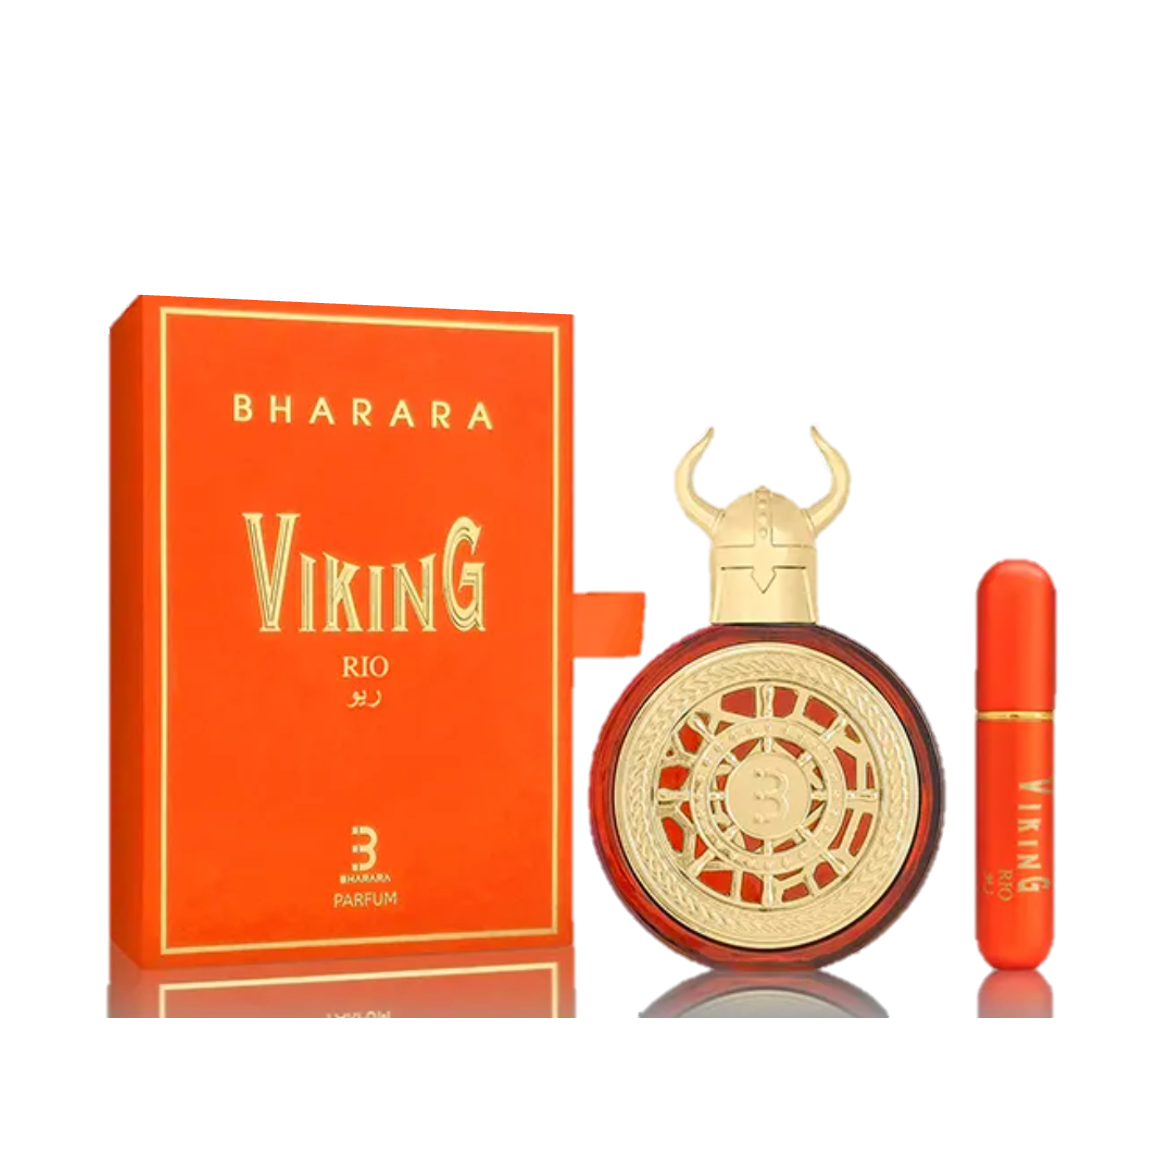 Bharara Viking Rio 100ml EDP Unisex - Attoperfumes